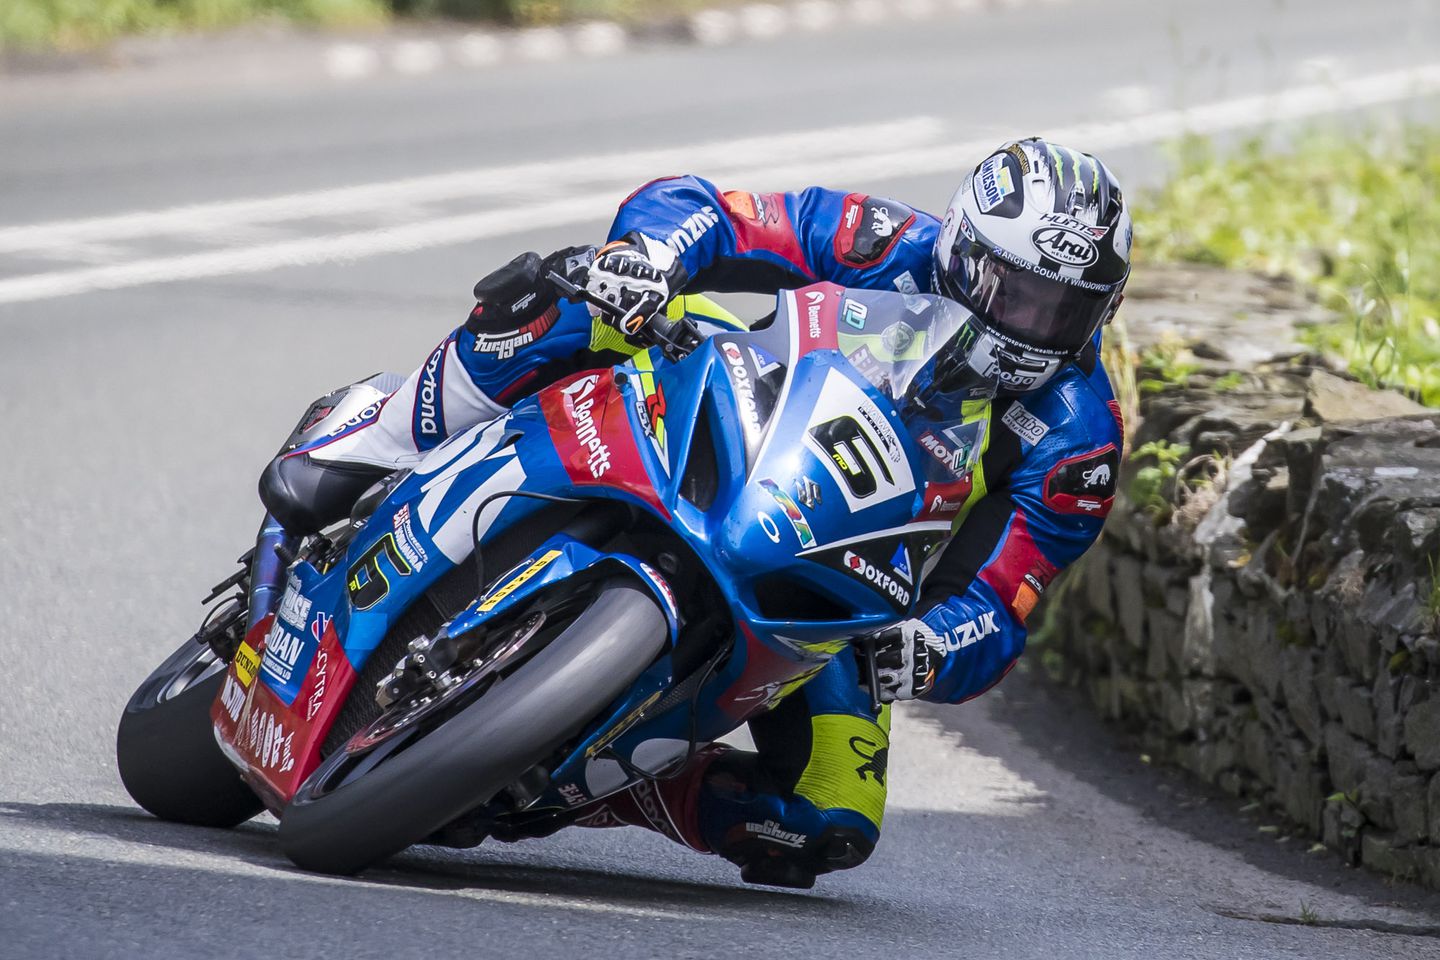 Michael Dunlop Wins 2017 Senior Isle of Man TT Race | Motorcyclist